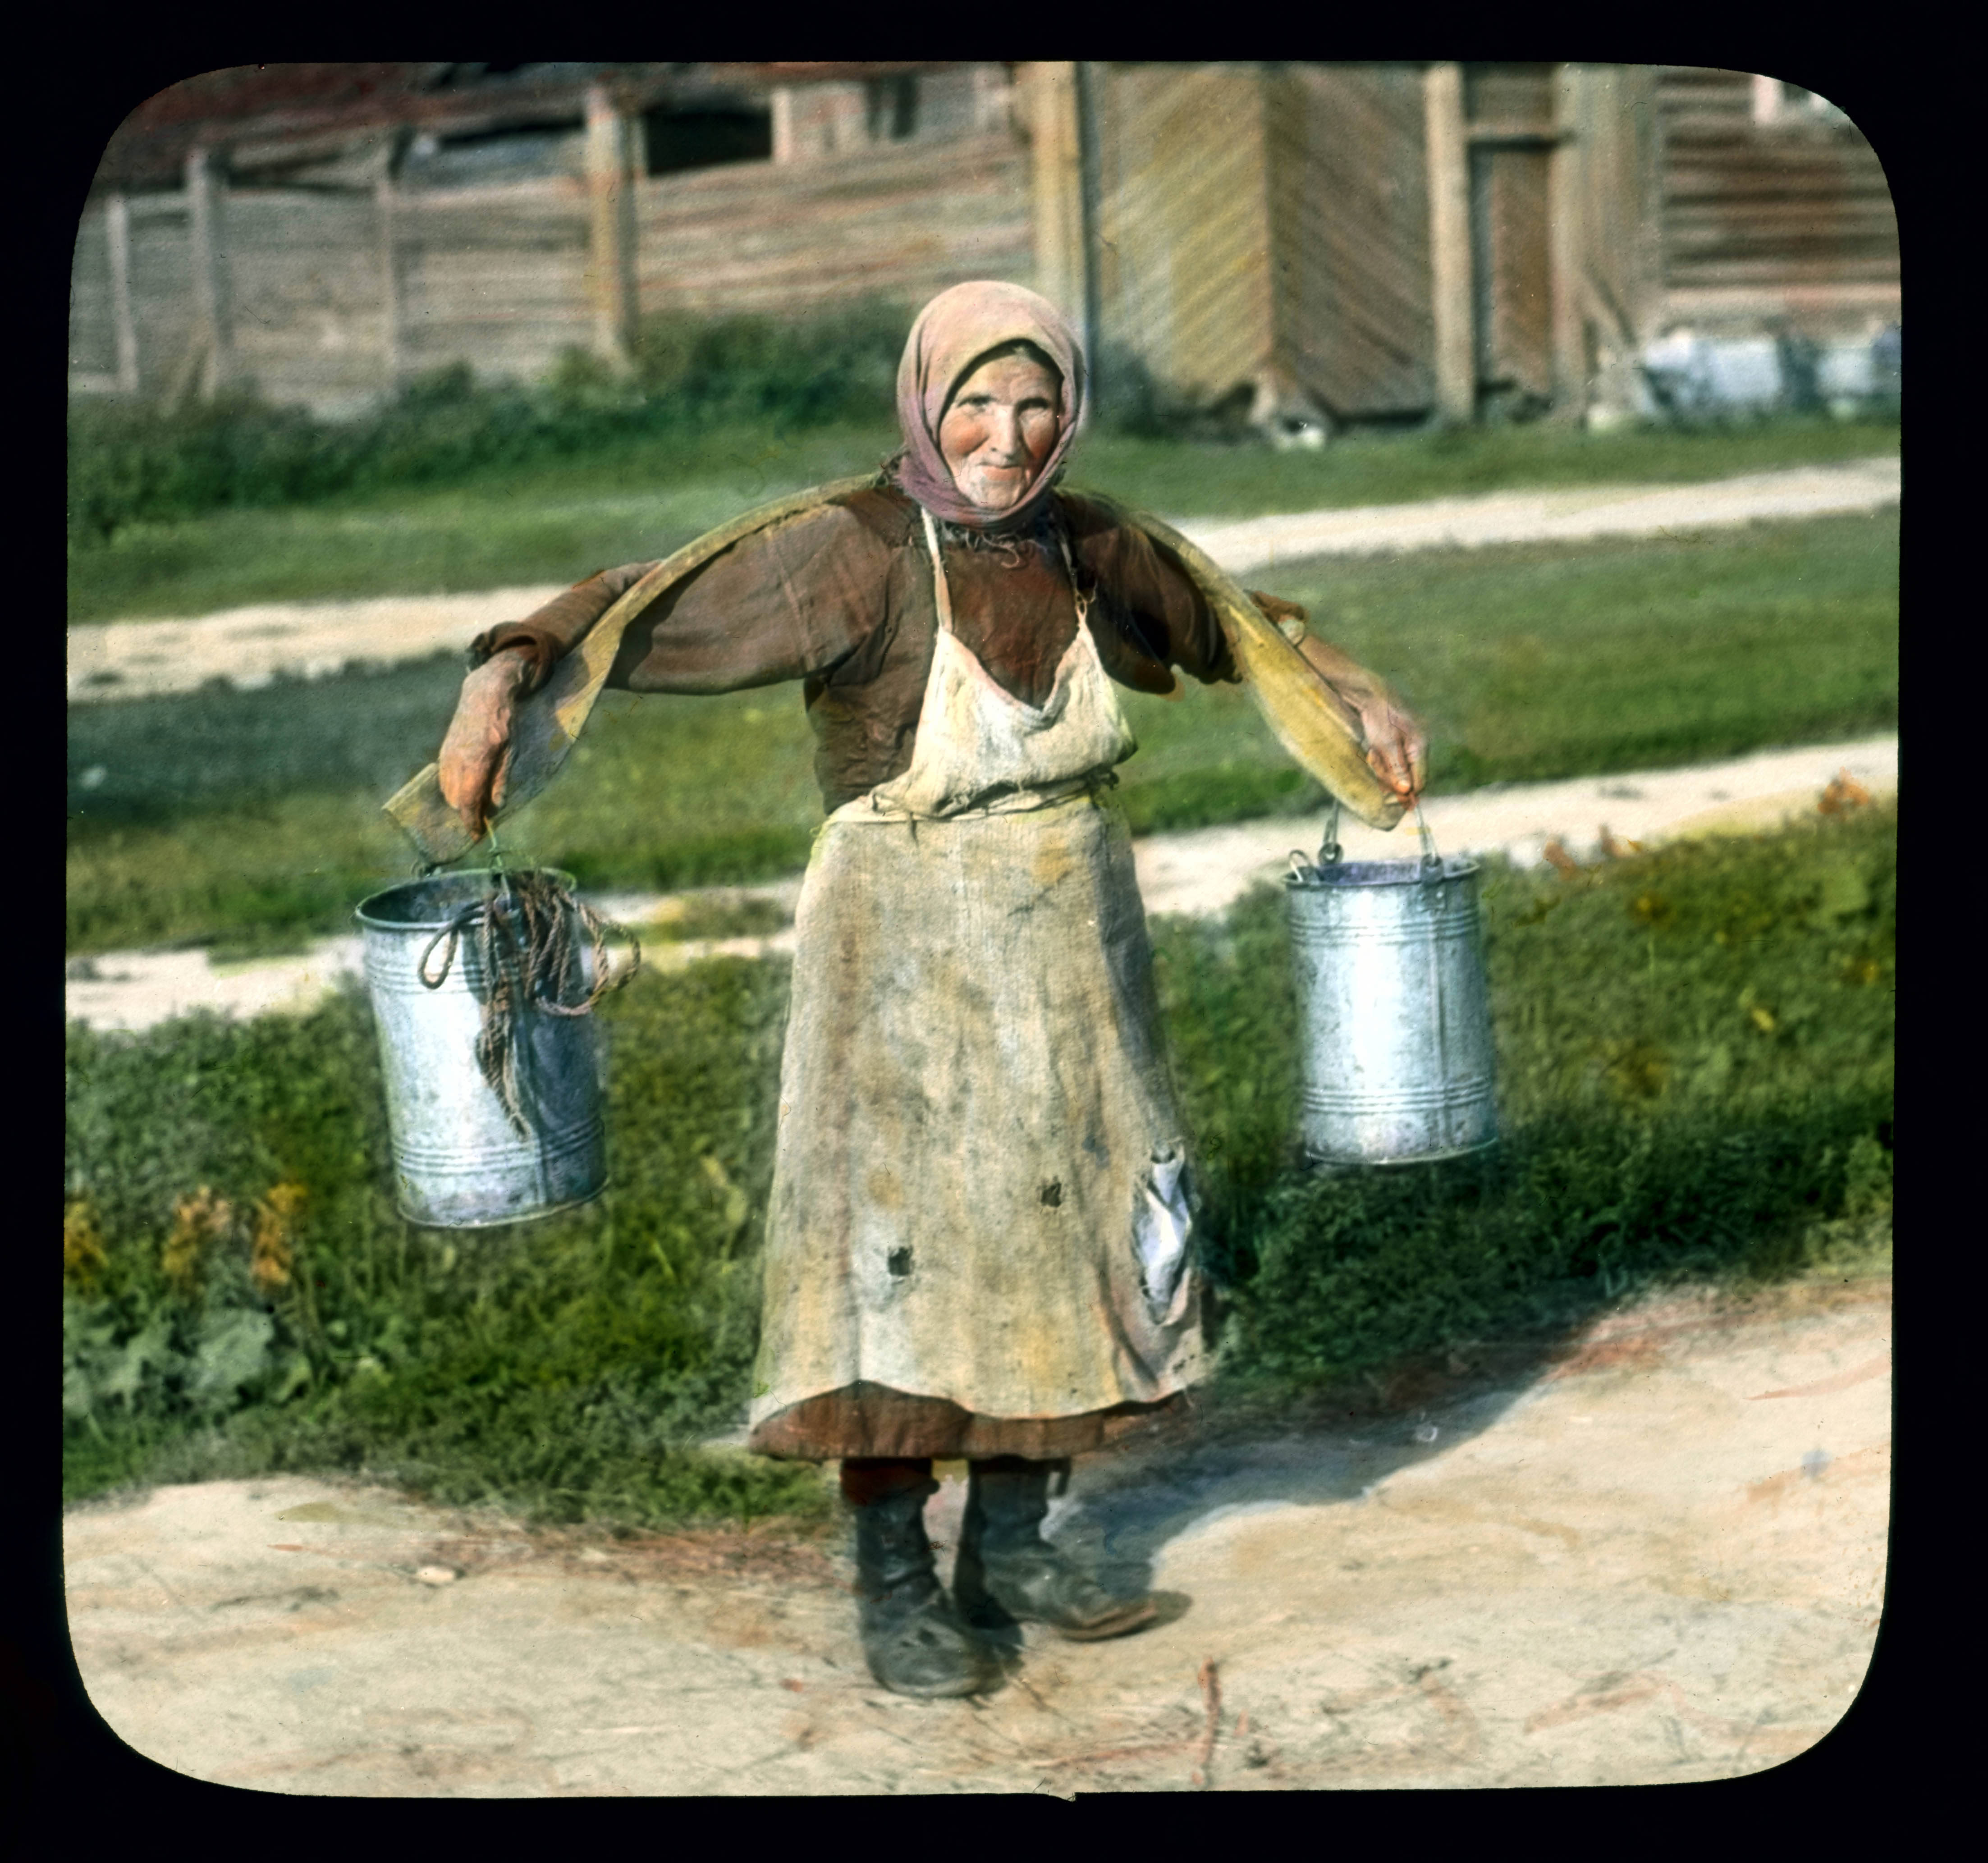 Saint Petersburg woman carrying buckets of water, near Leningrad